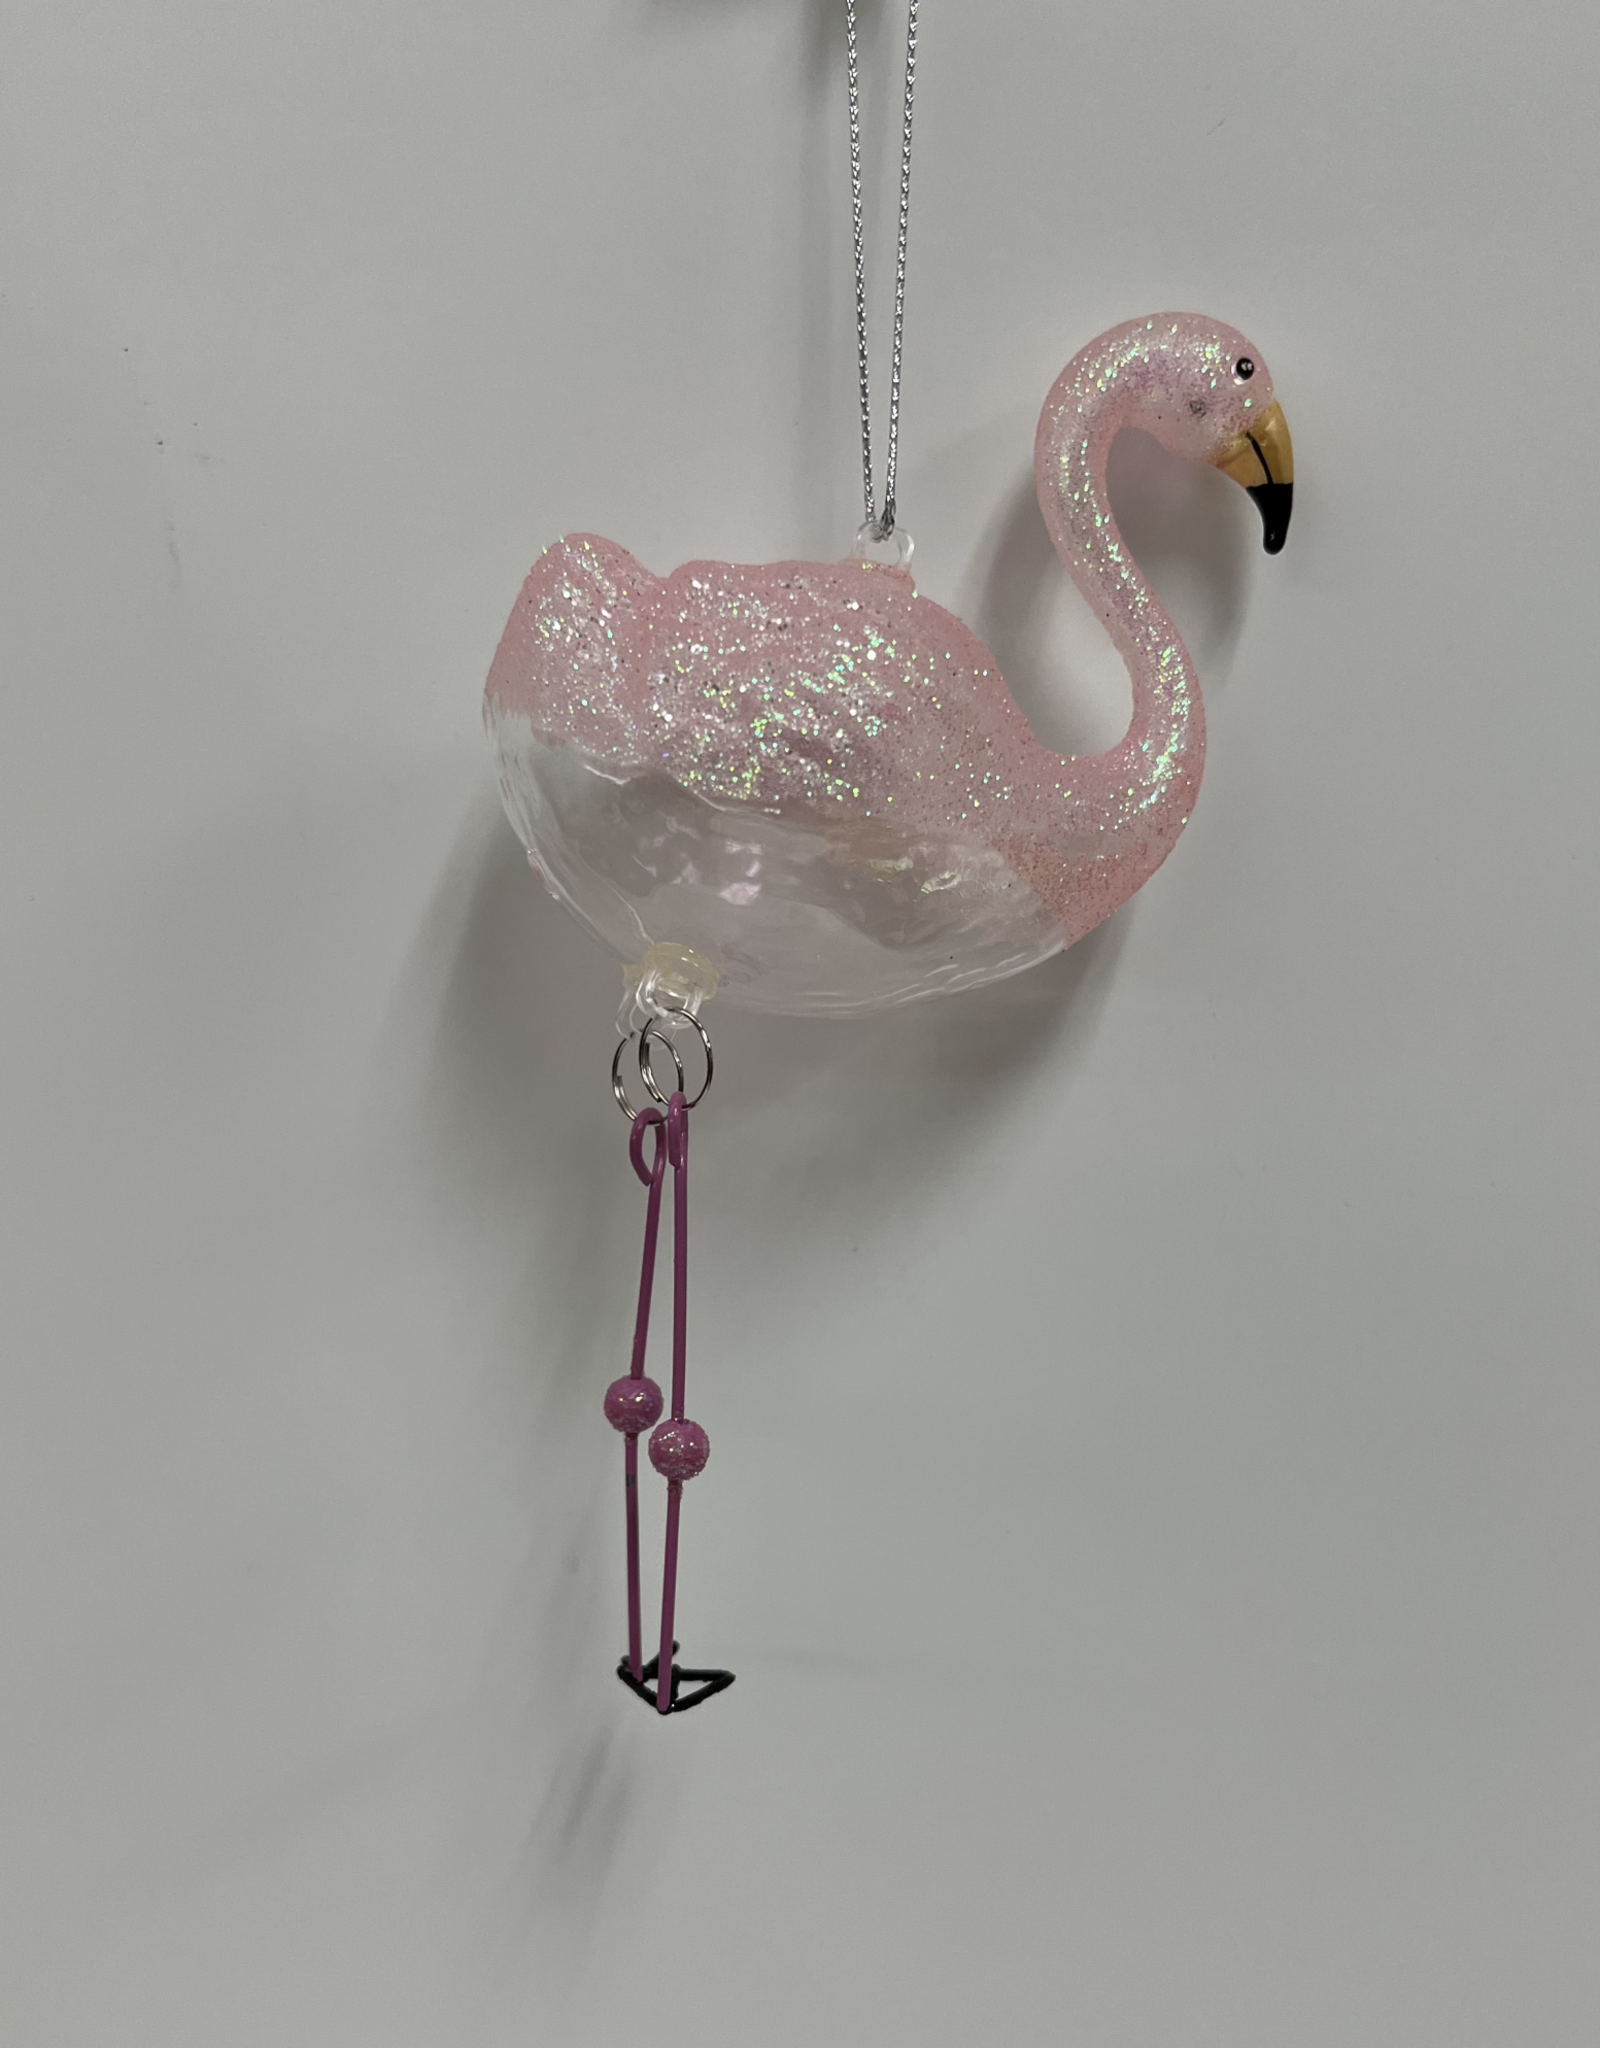 Demdaco Pink Flamingo Glass Ornament